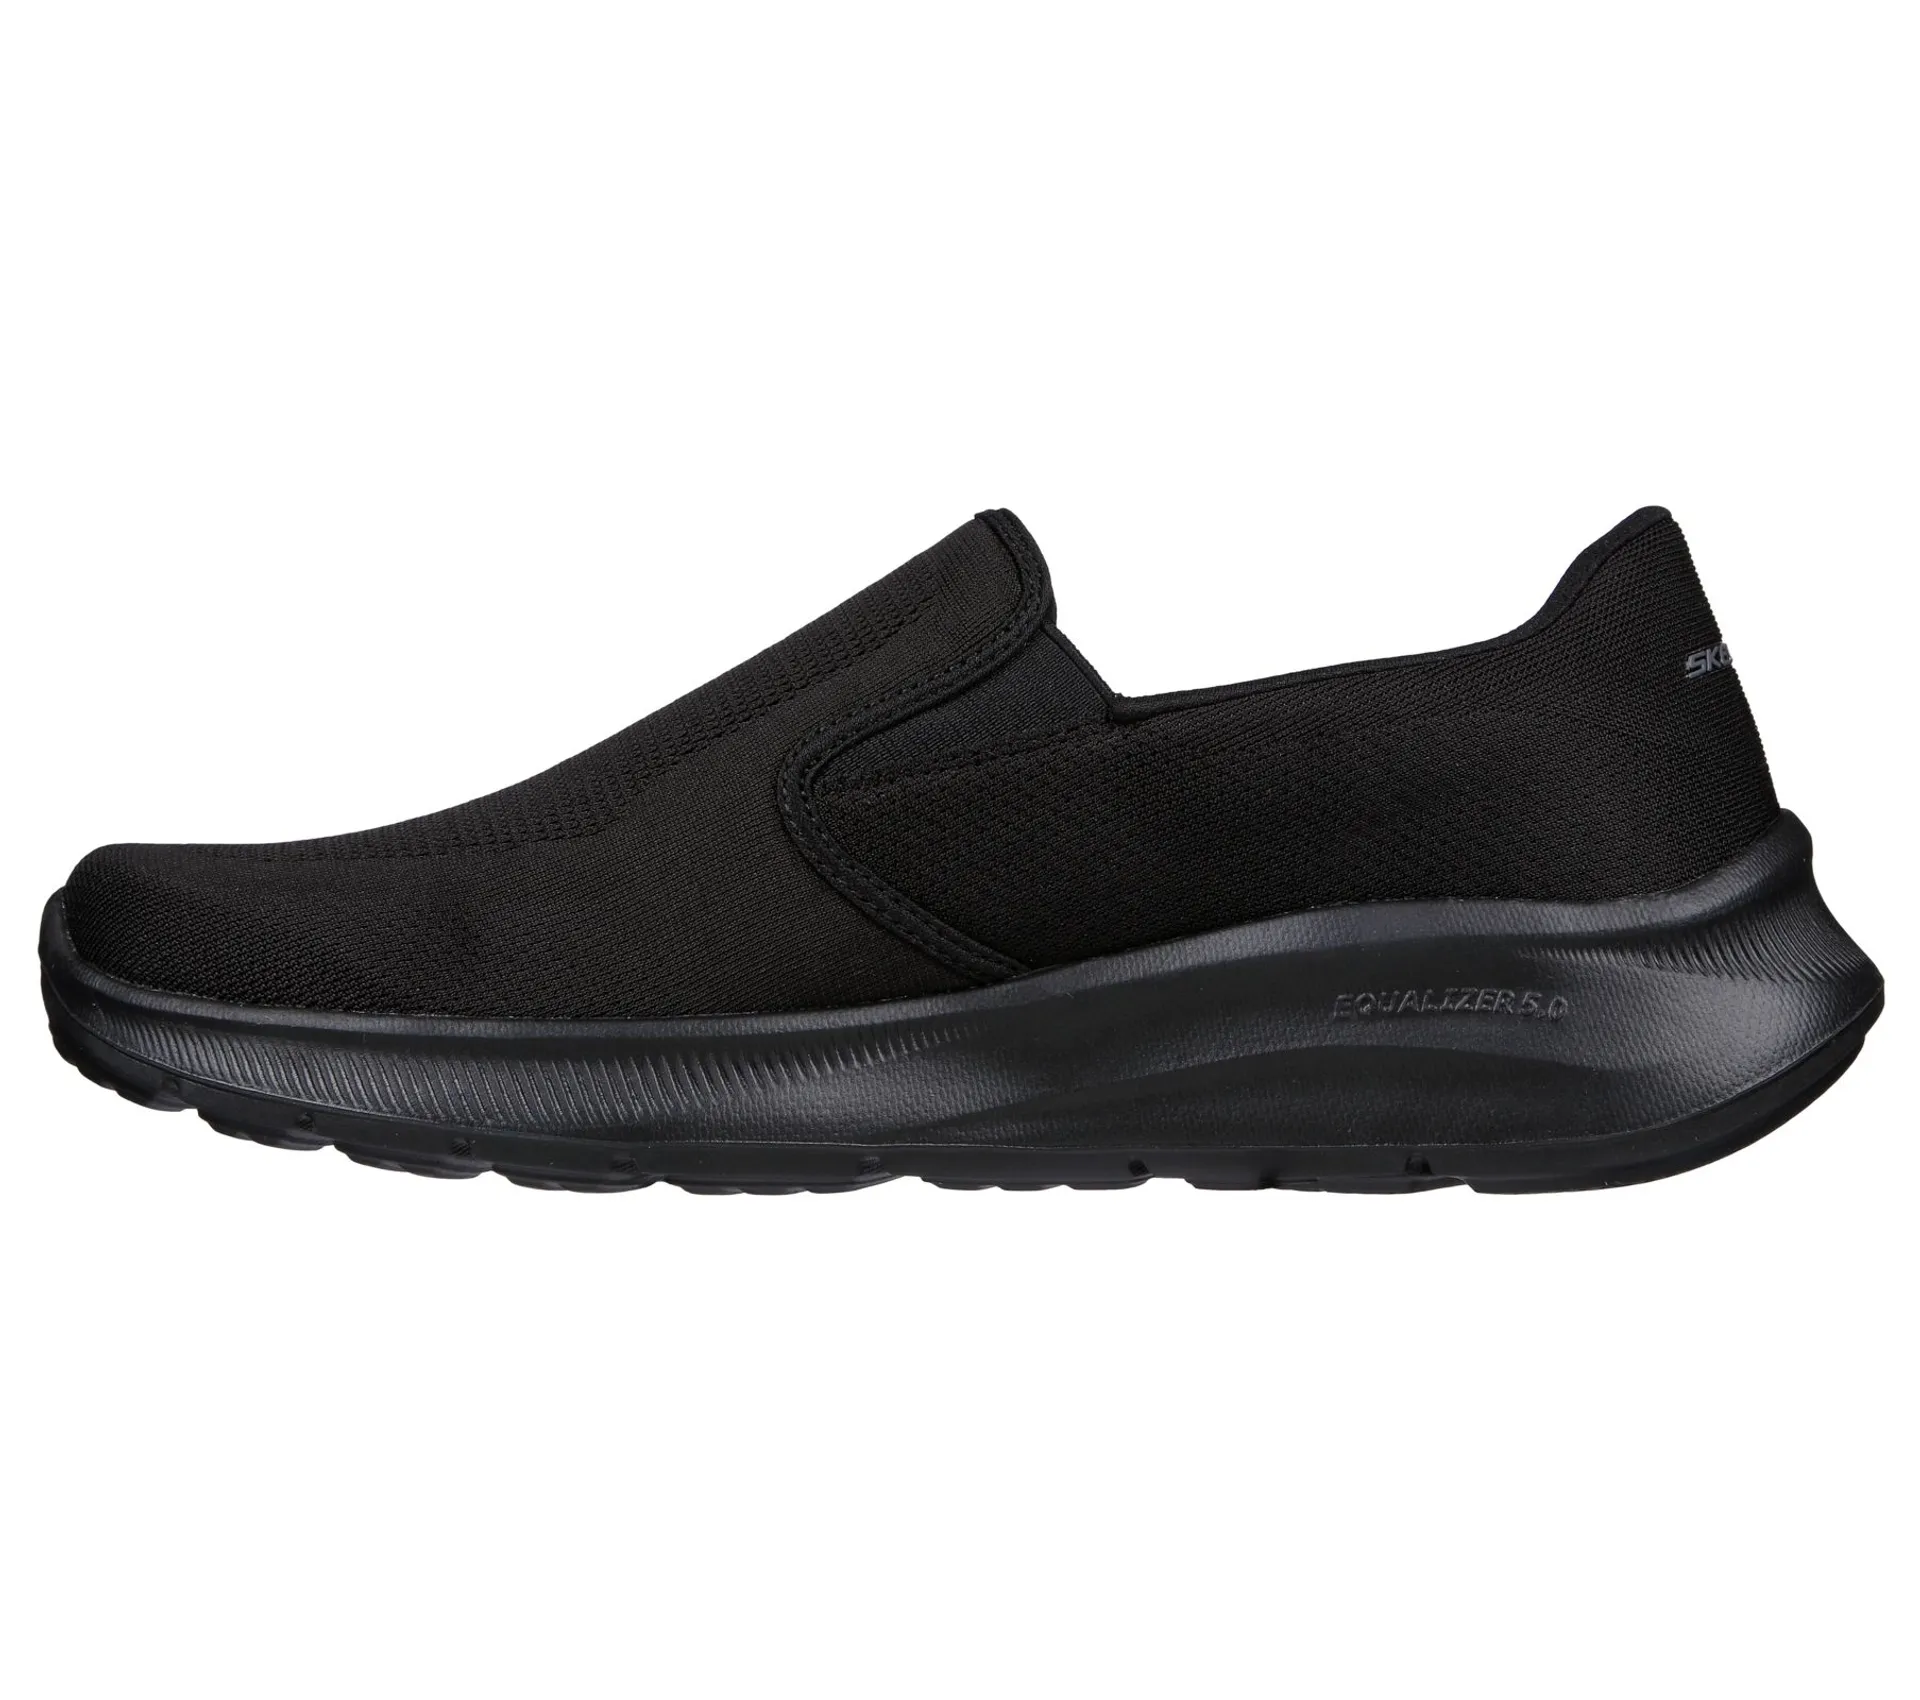 Skechers miesten loafer Equalizer 5.0 GL - MUSTA - 4